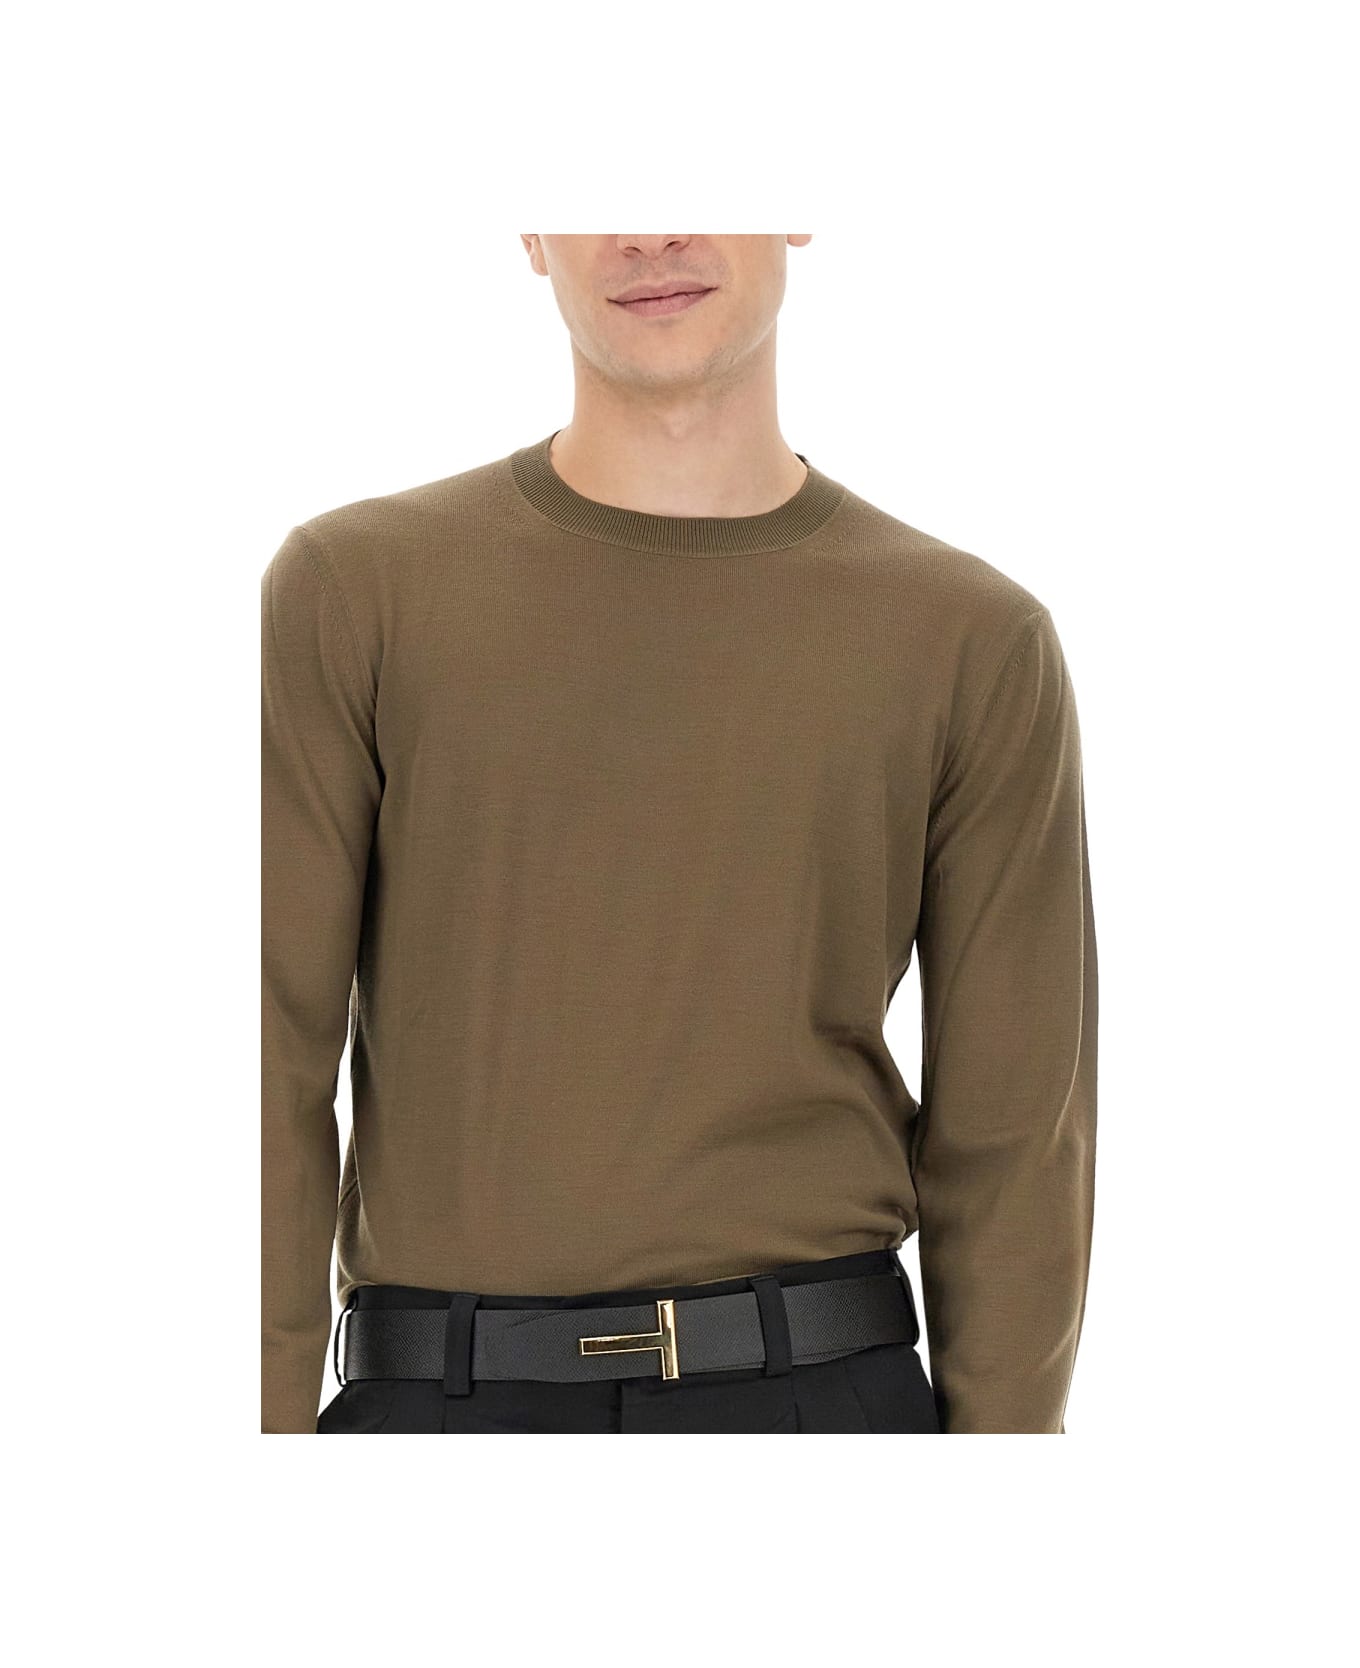 Tom Ford Slim Fit Shirt - ARMY GREEN